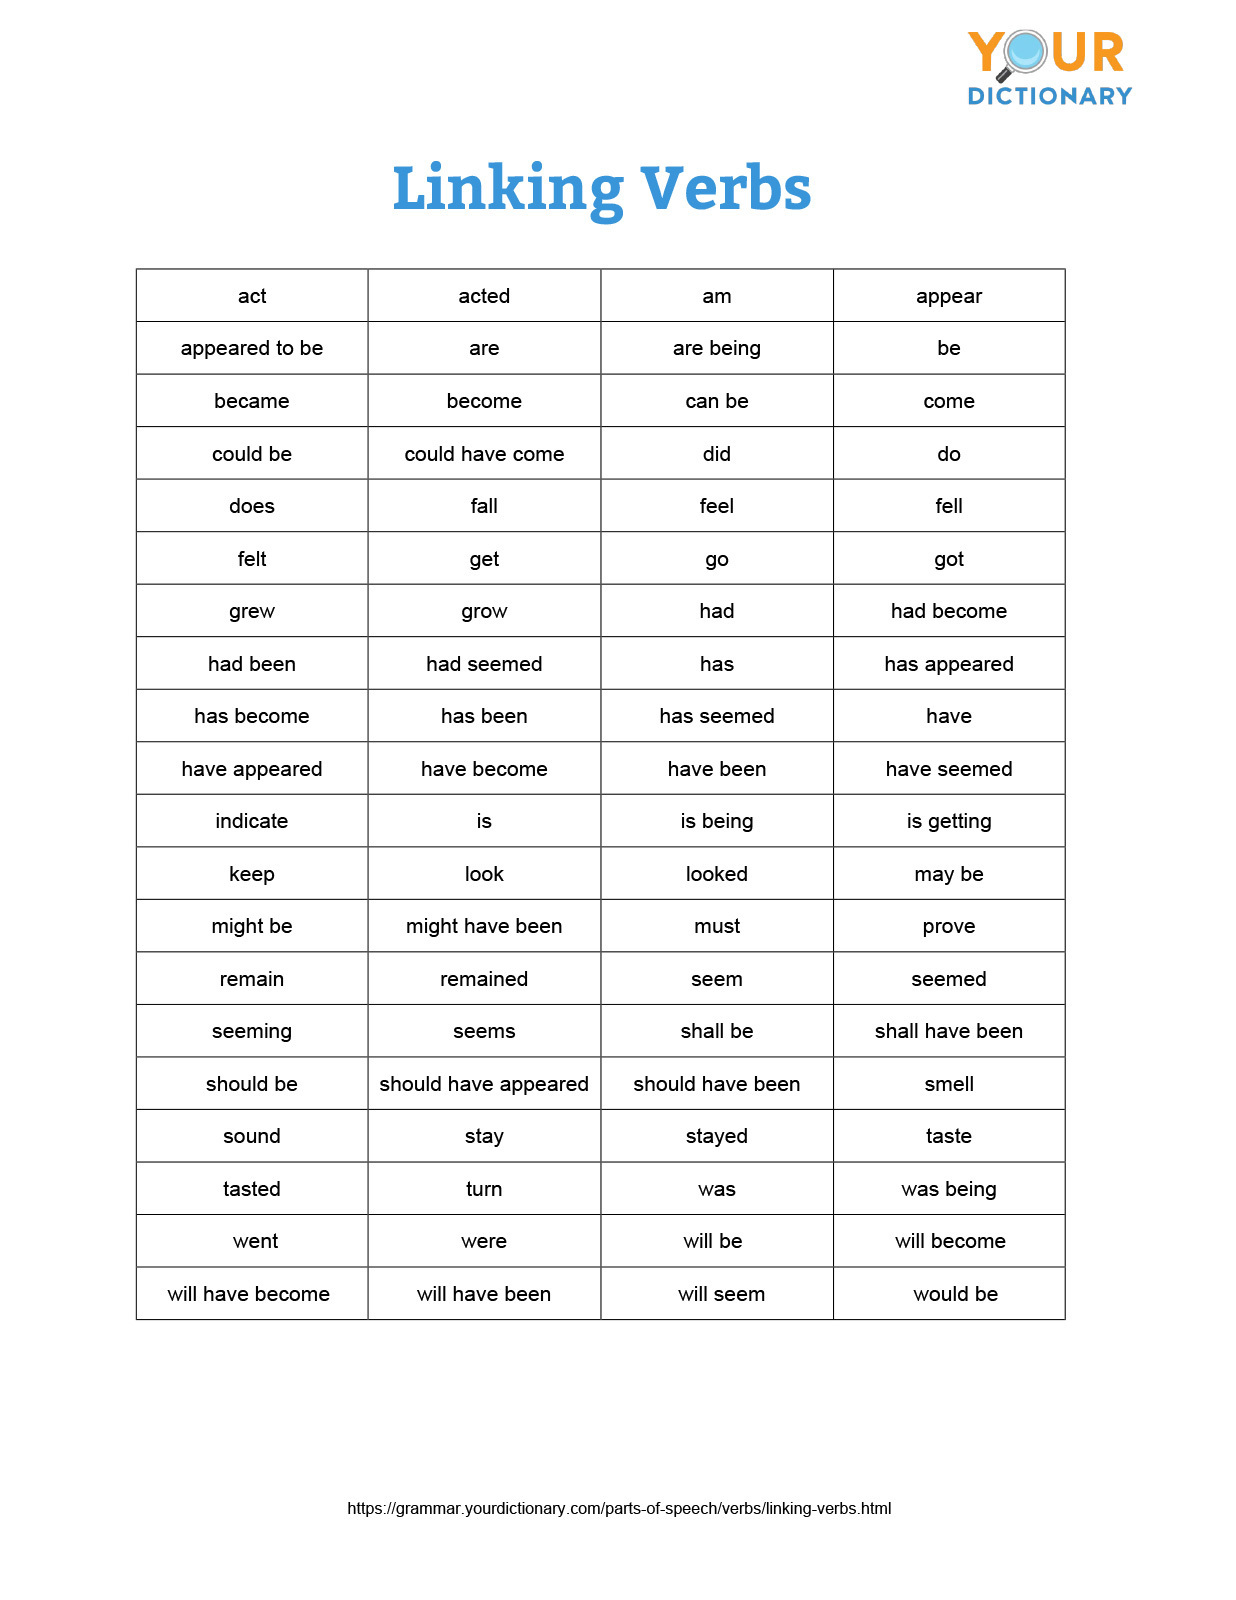 Linking Verbs Printable List